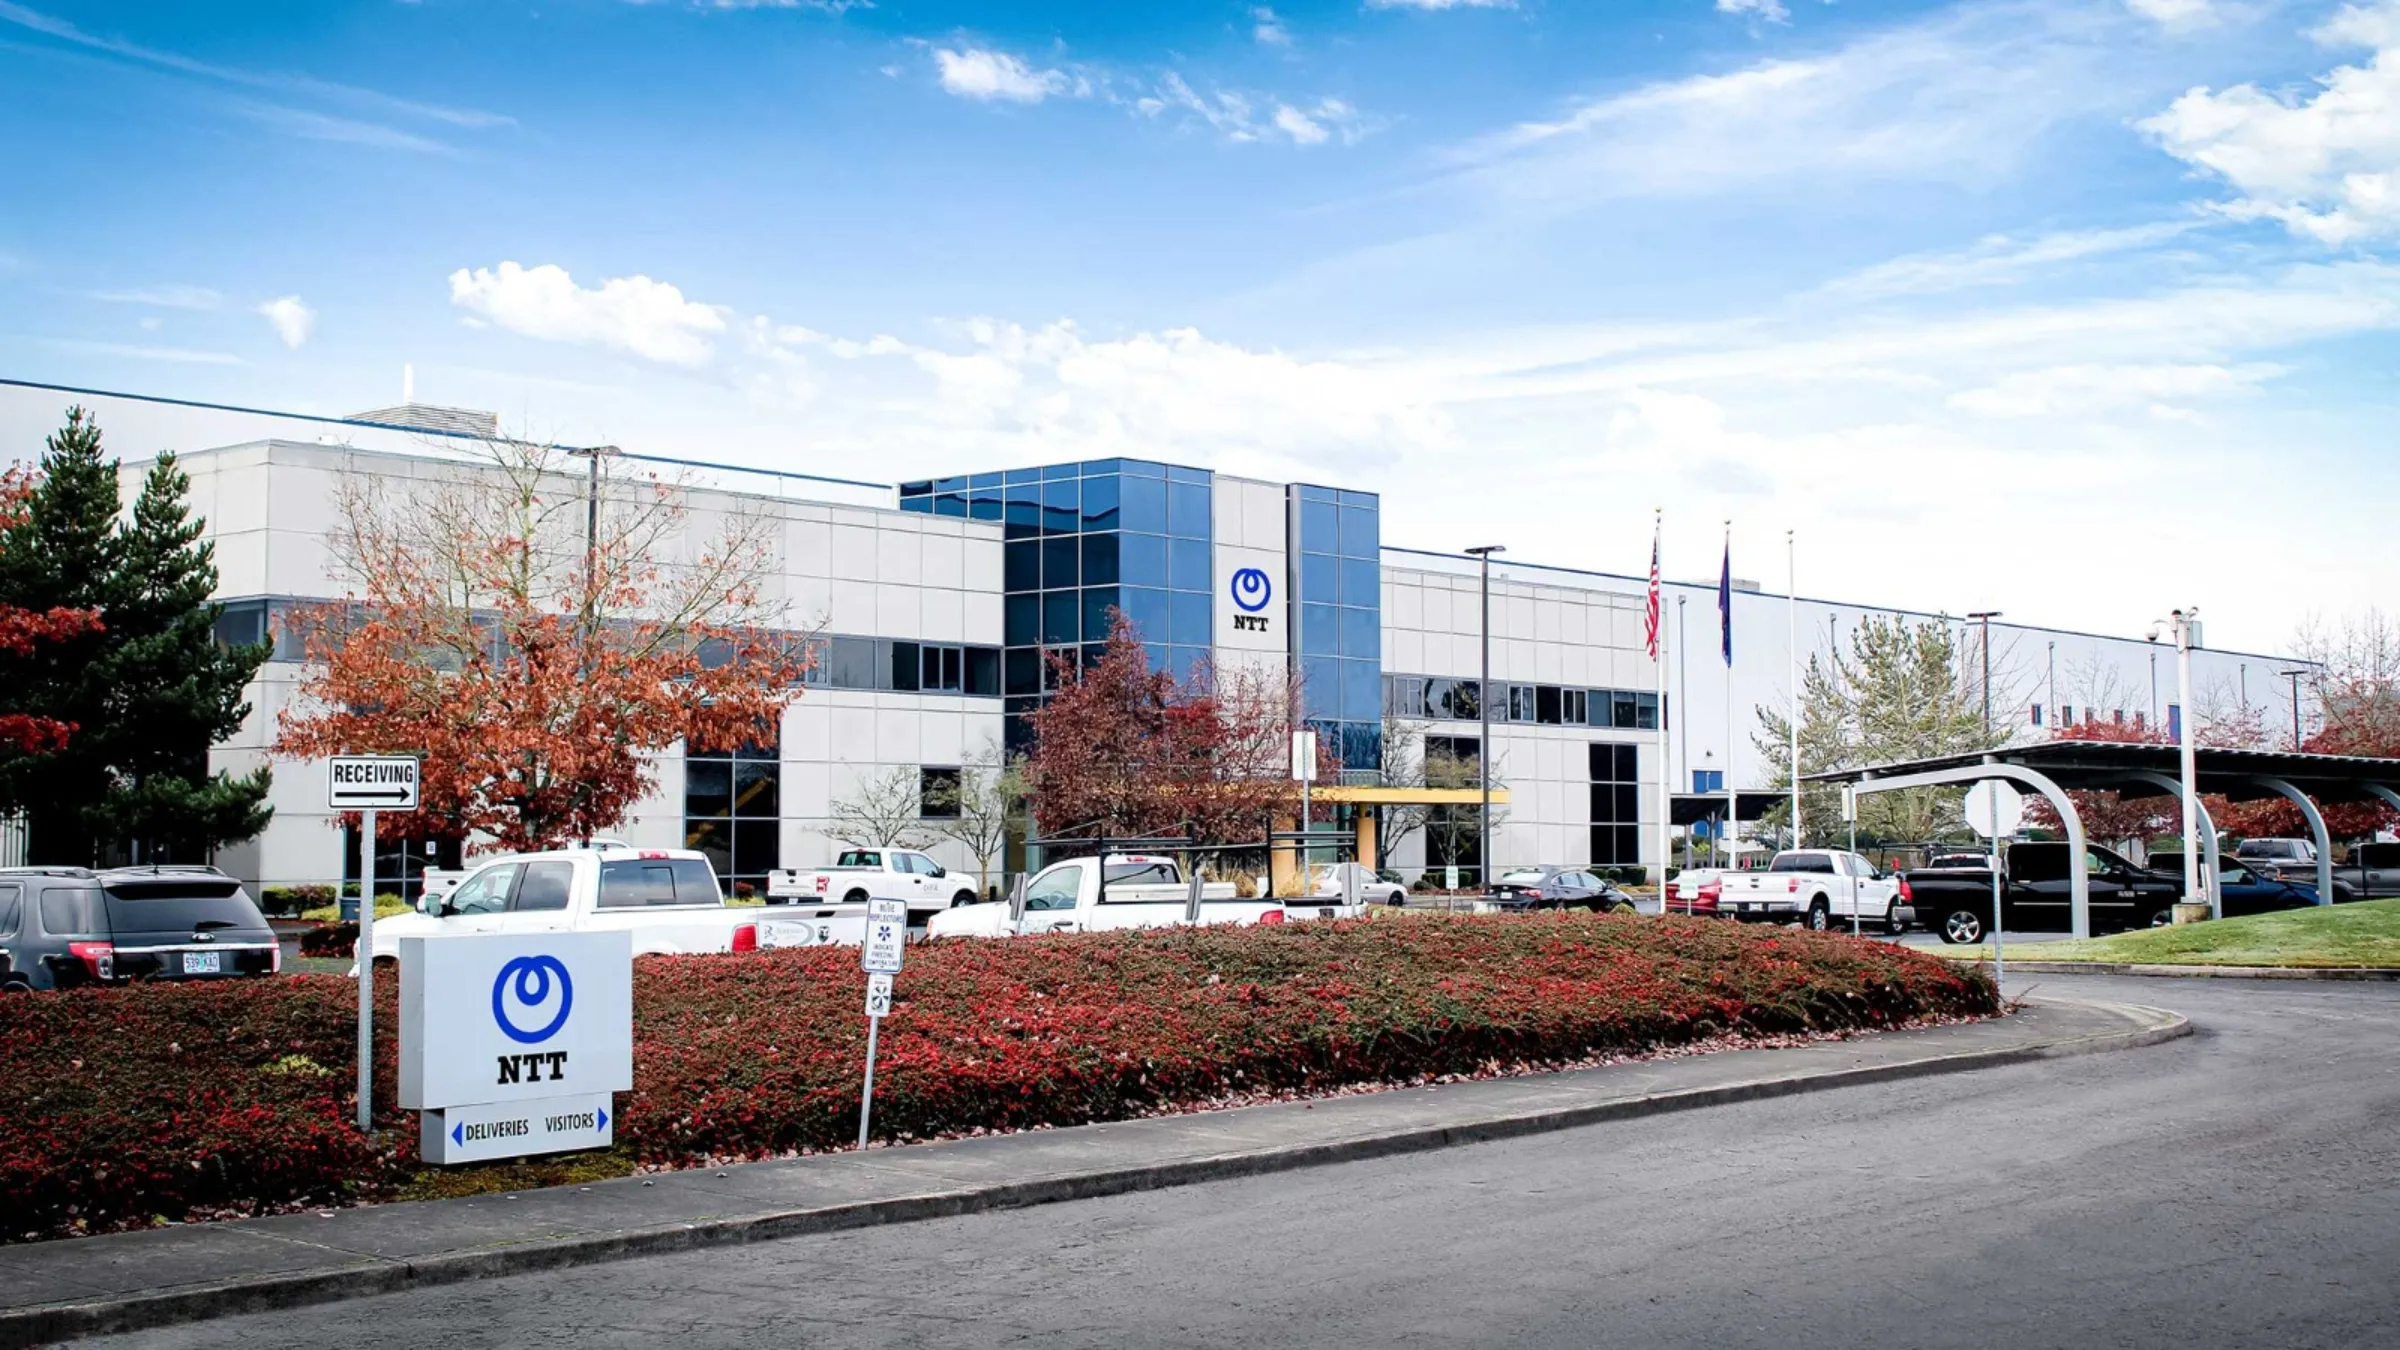 A data center in Hillsboro, Oregon, seen in March 2021